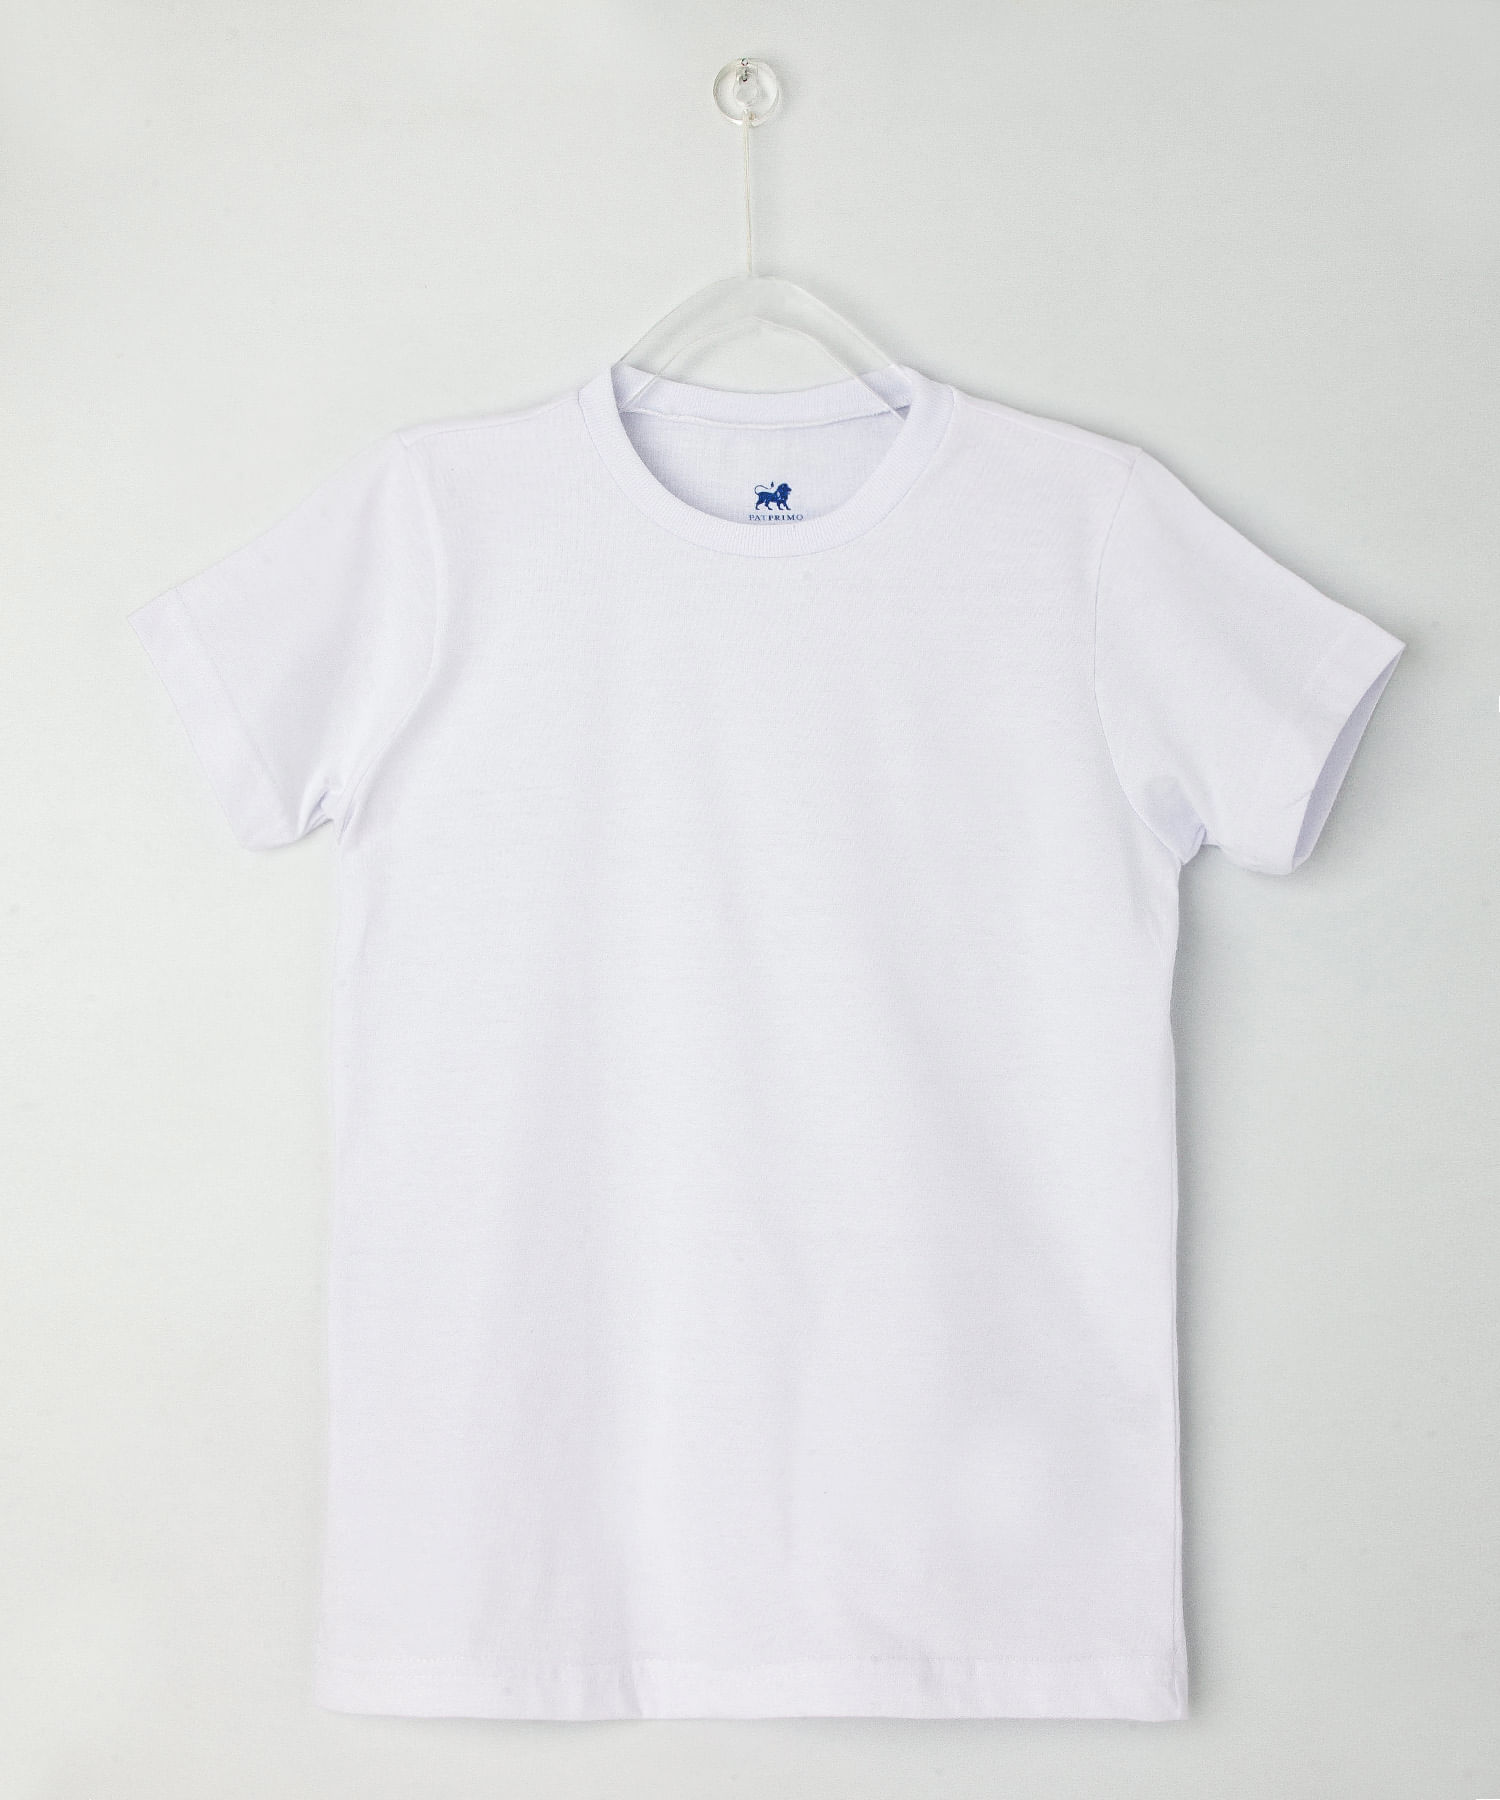 Edición Rama Con qué frecuencia Camiseta Interior Blanca 59202TG - Patprimo